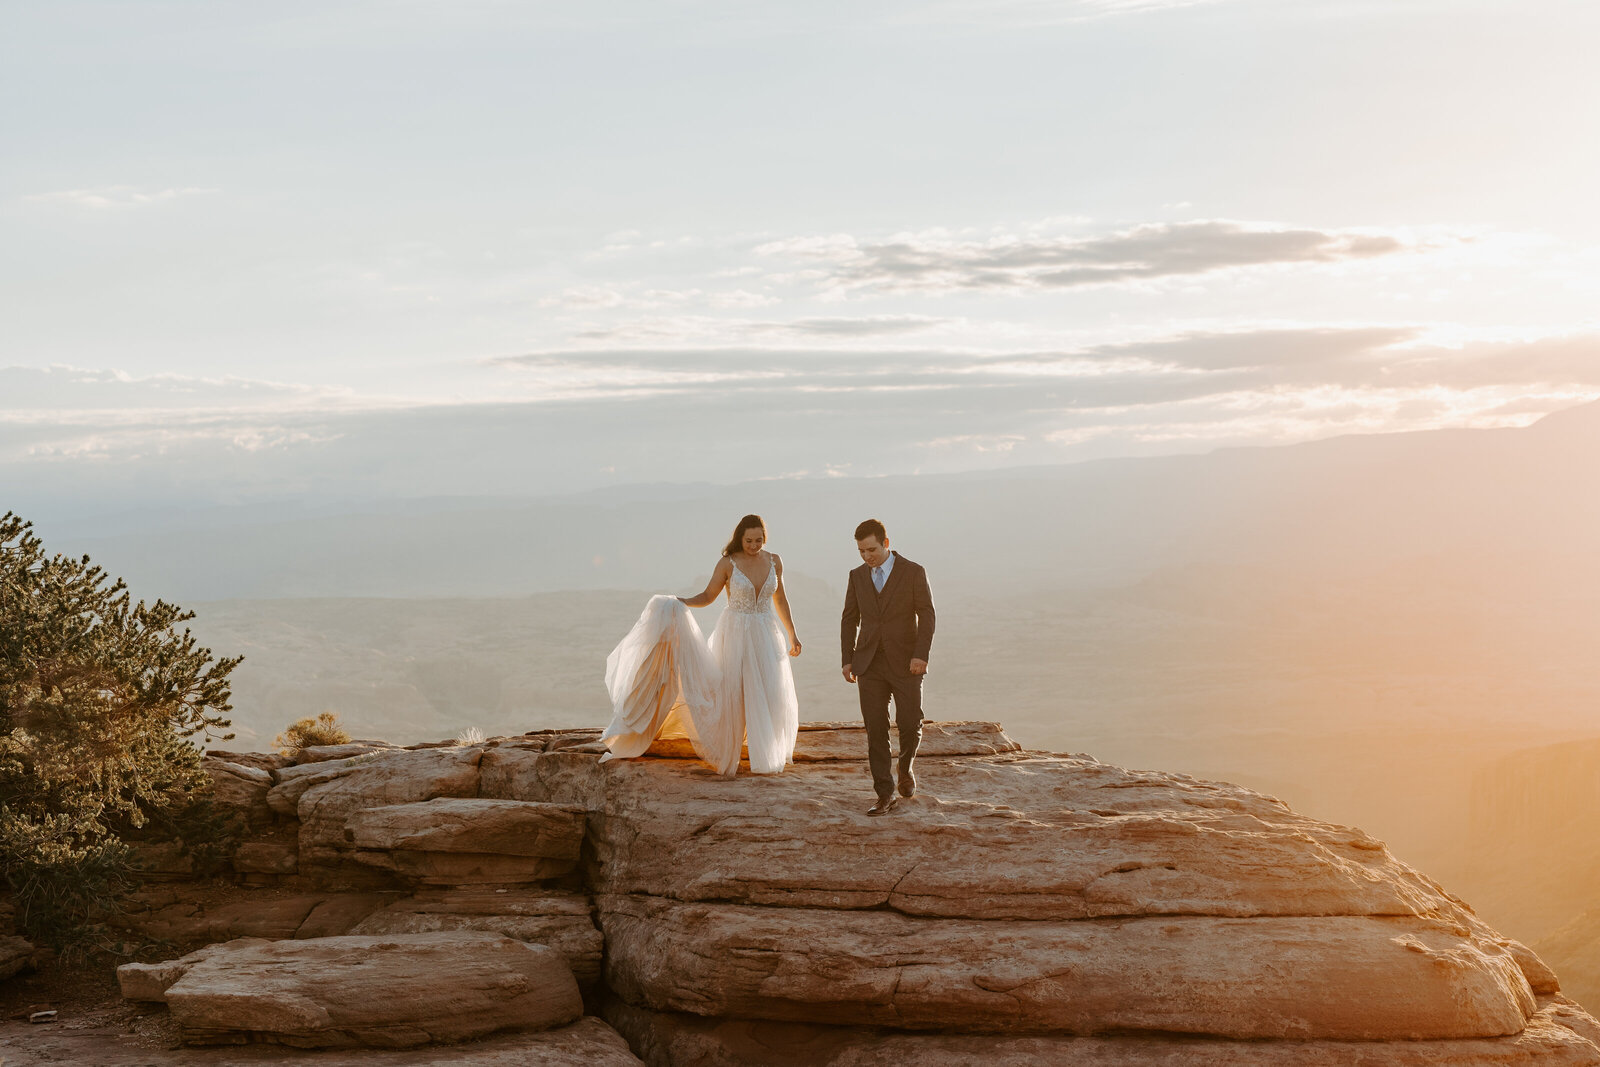 Bride and groom walking on sandstone rocks in Canyonlands National Park at sunrise